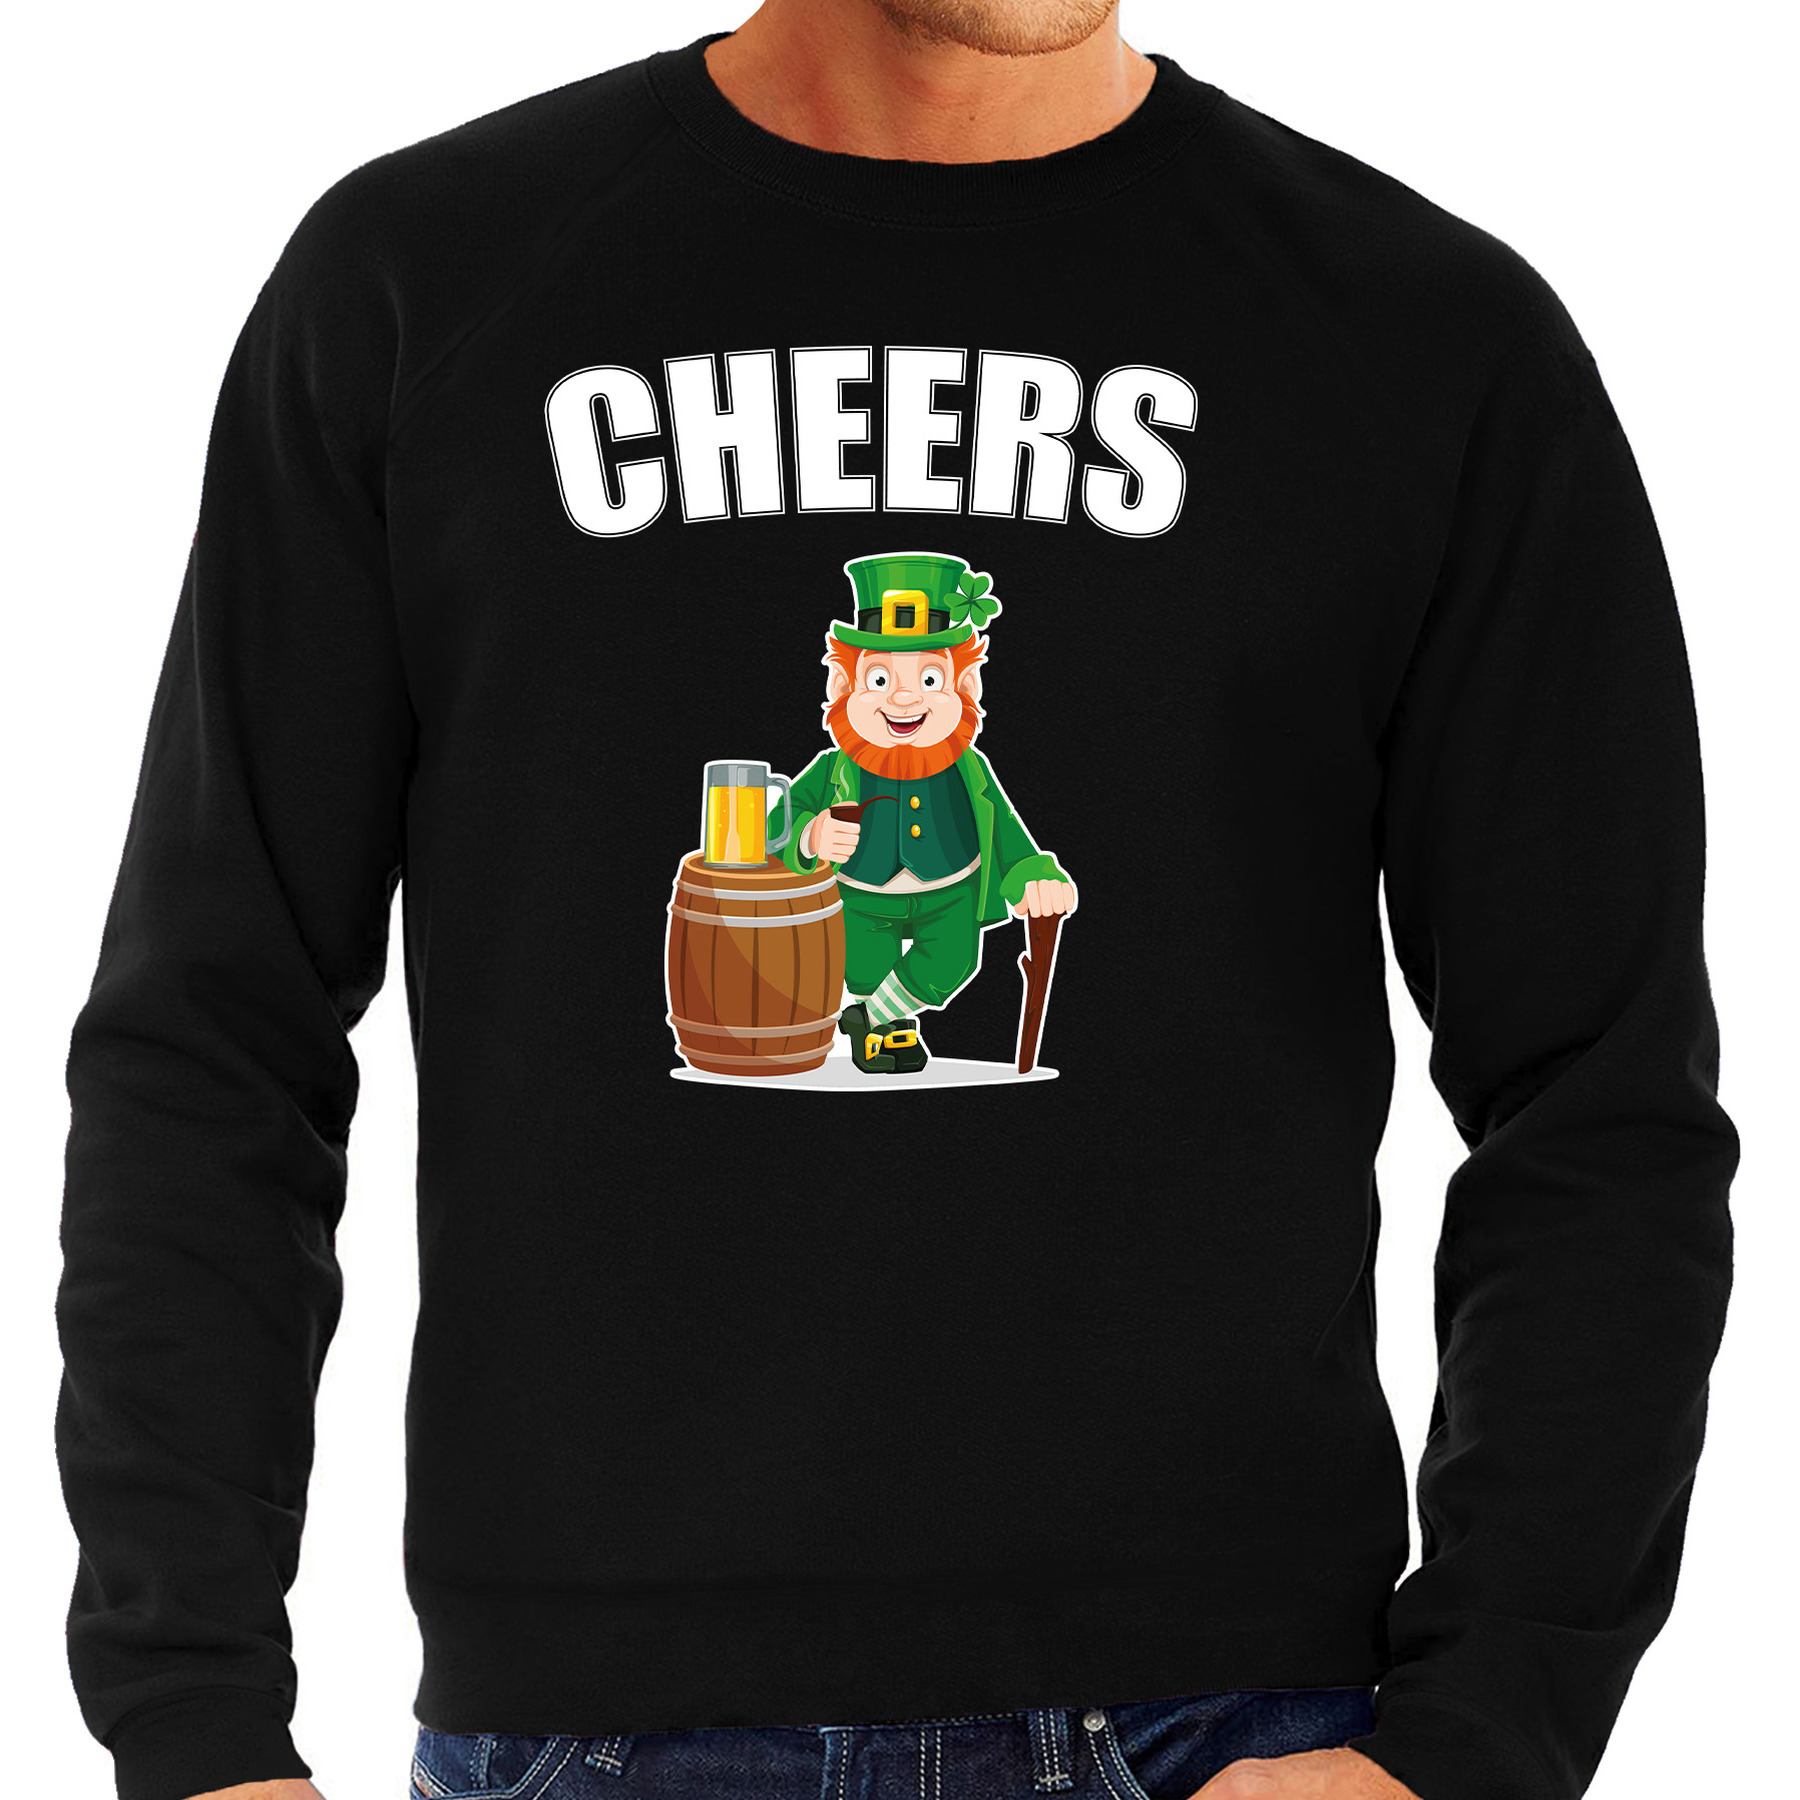 Cheers-St. Patricks day sweater-kostuum zwart heren